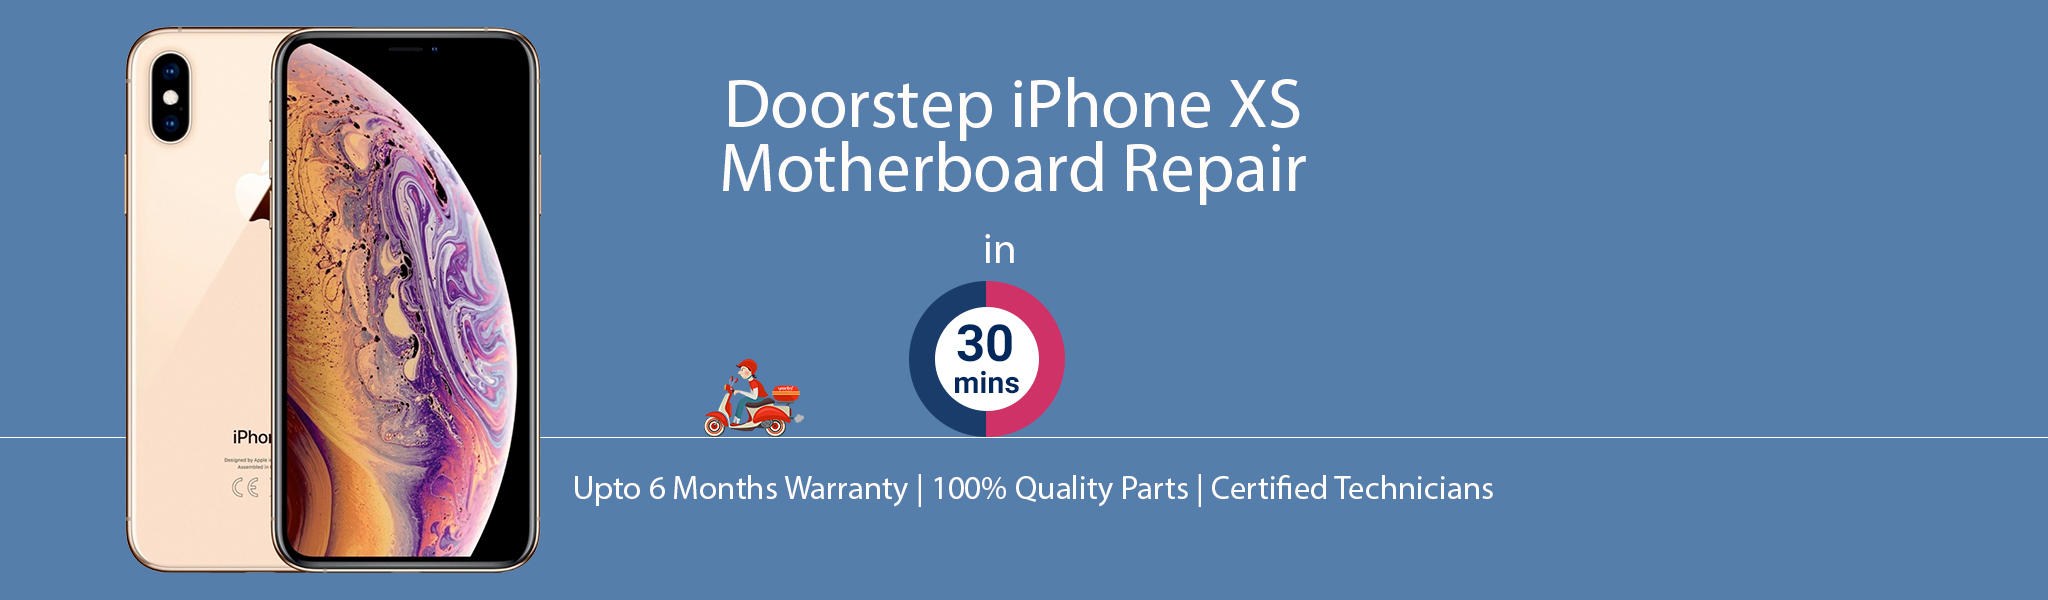 iphone-xs-motherboard-repair.jpg